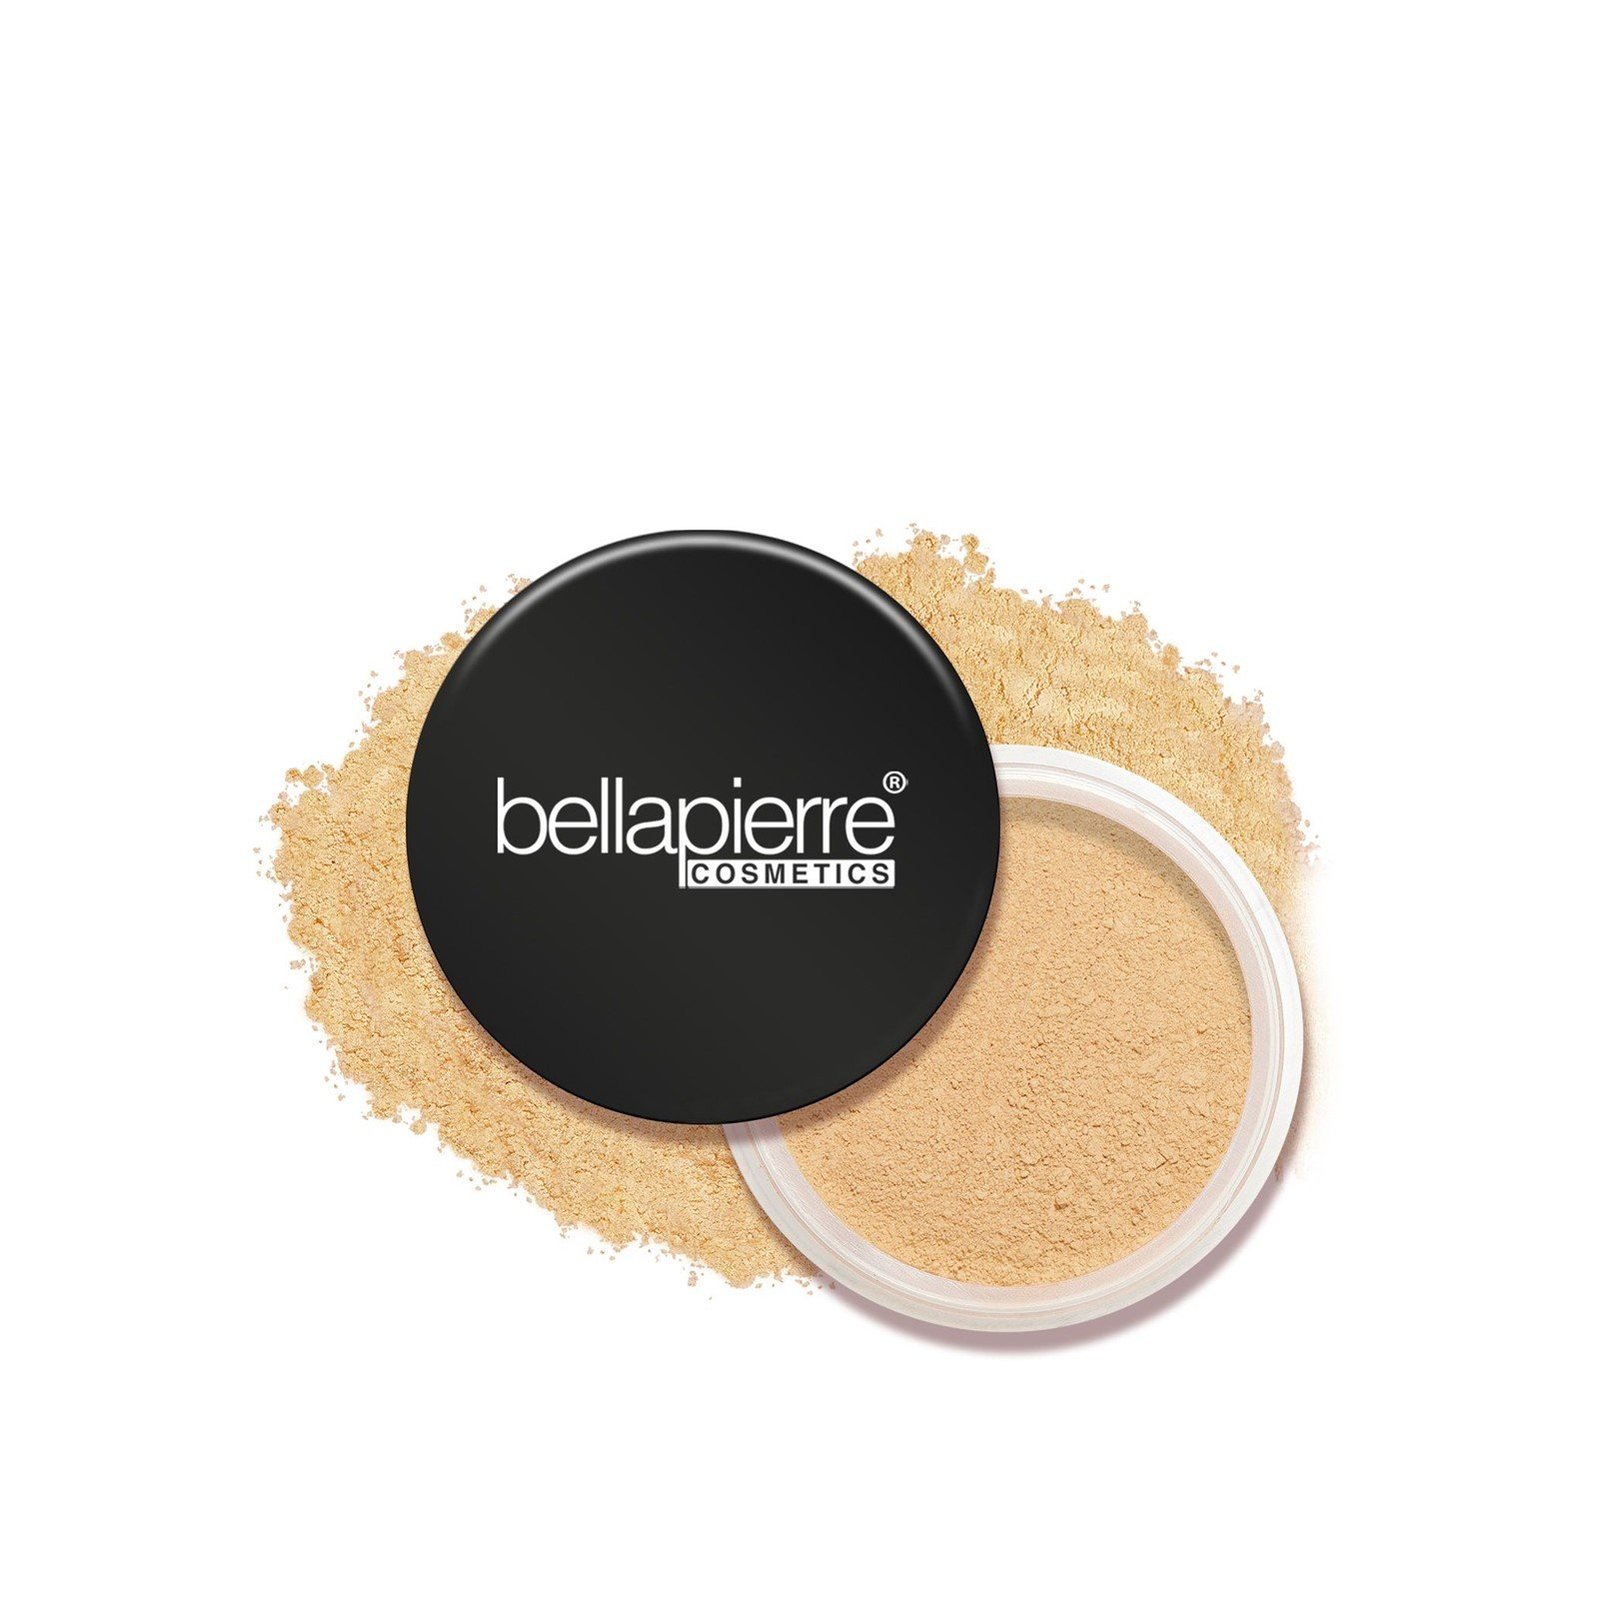 Bellapierre Cosmetics Mineral Foundation SPF15 Cinnamon 9g (0.32oz)